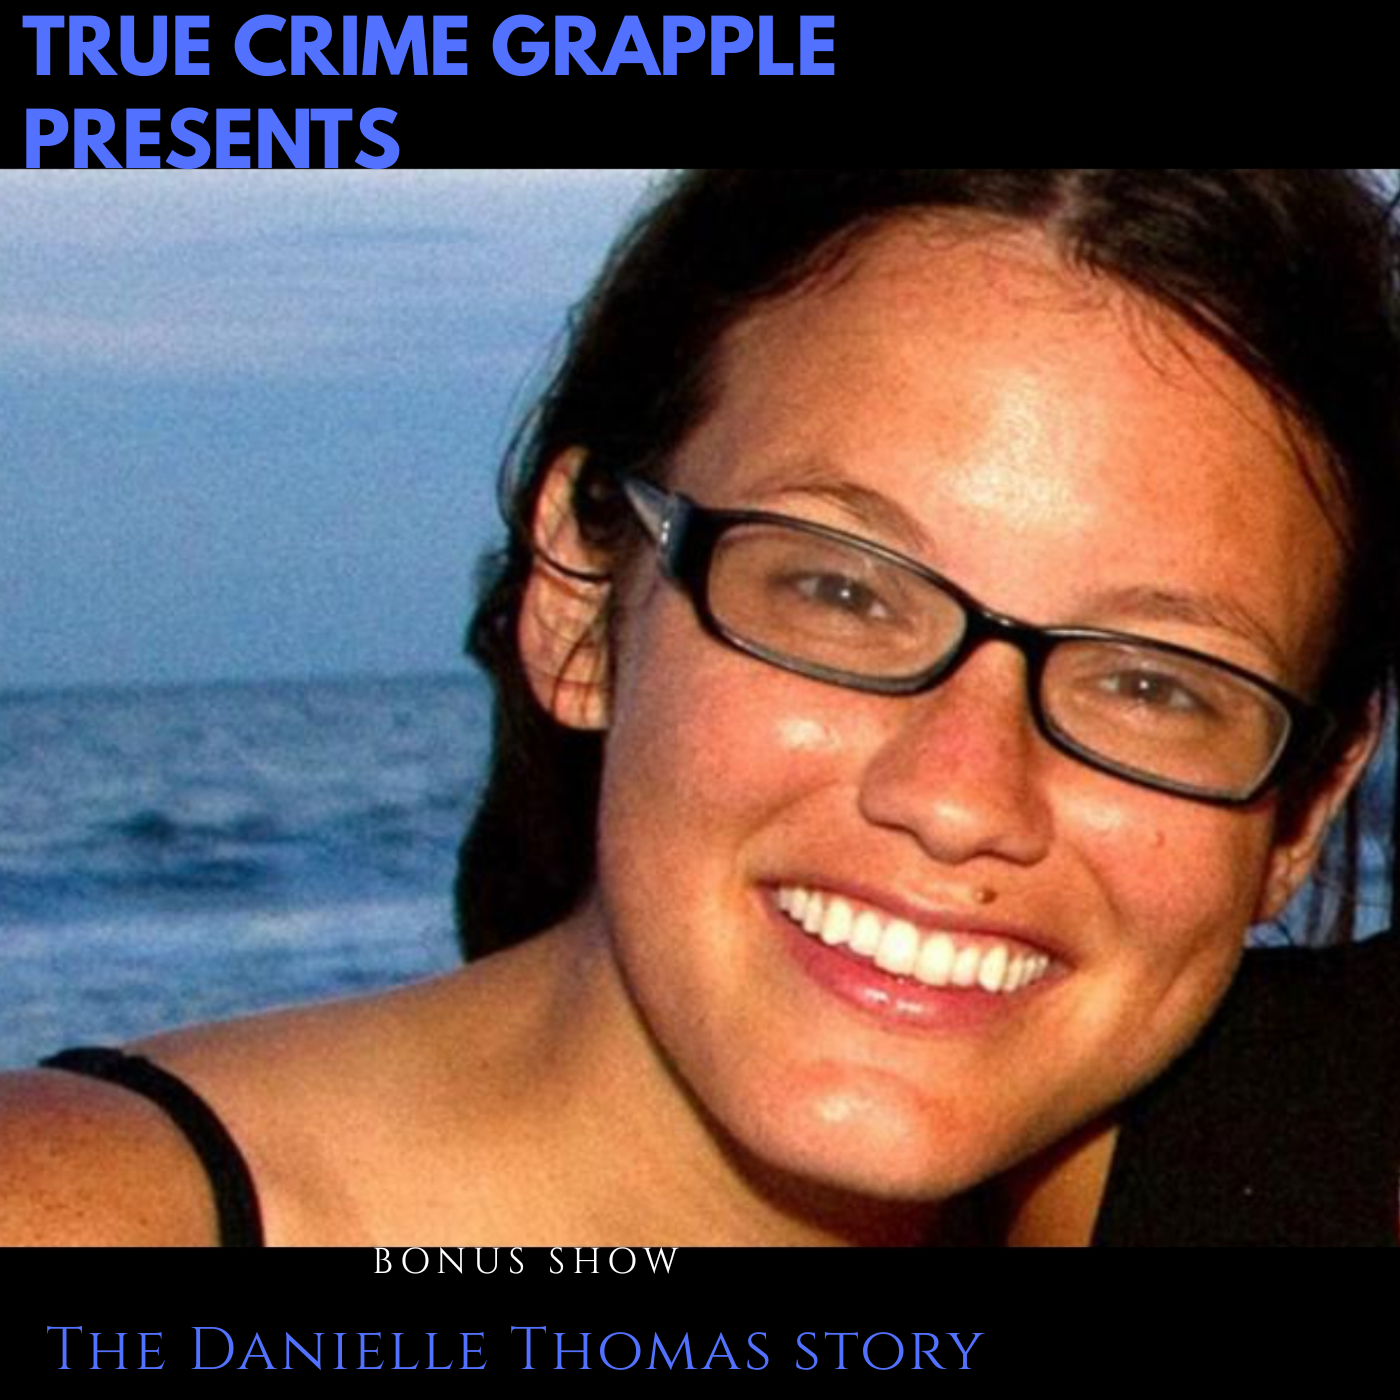 Artwork for podcast True crime grapple